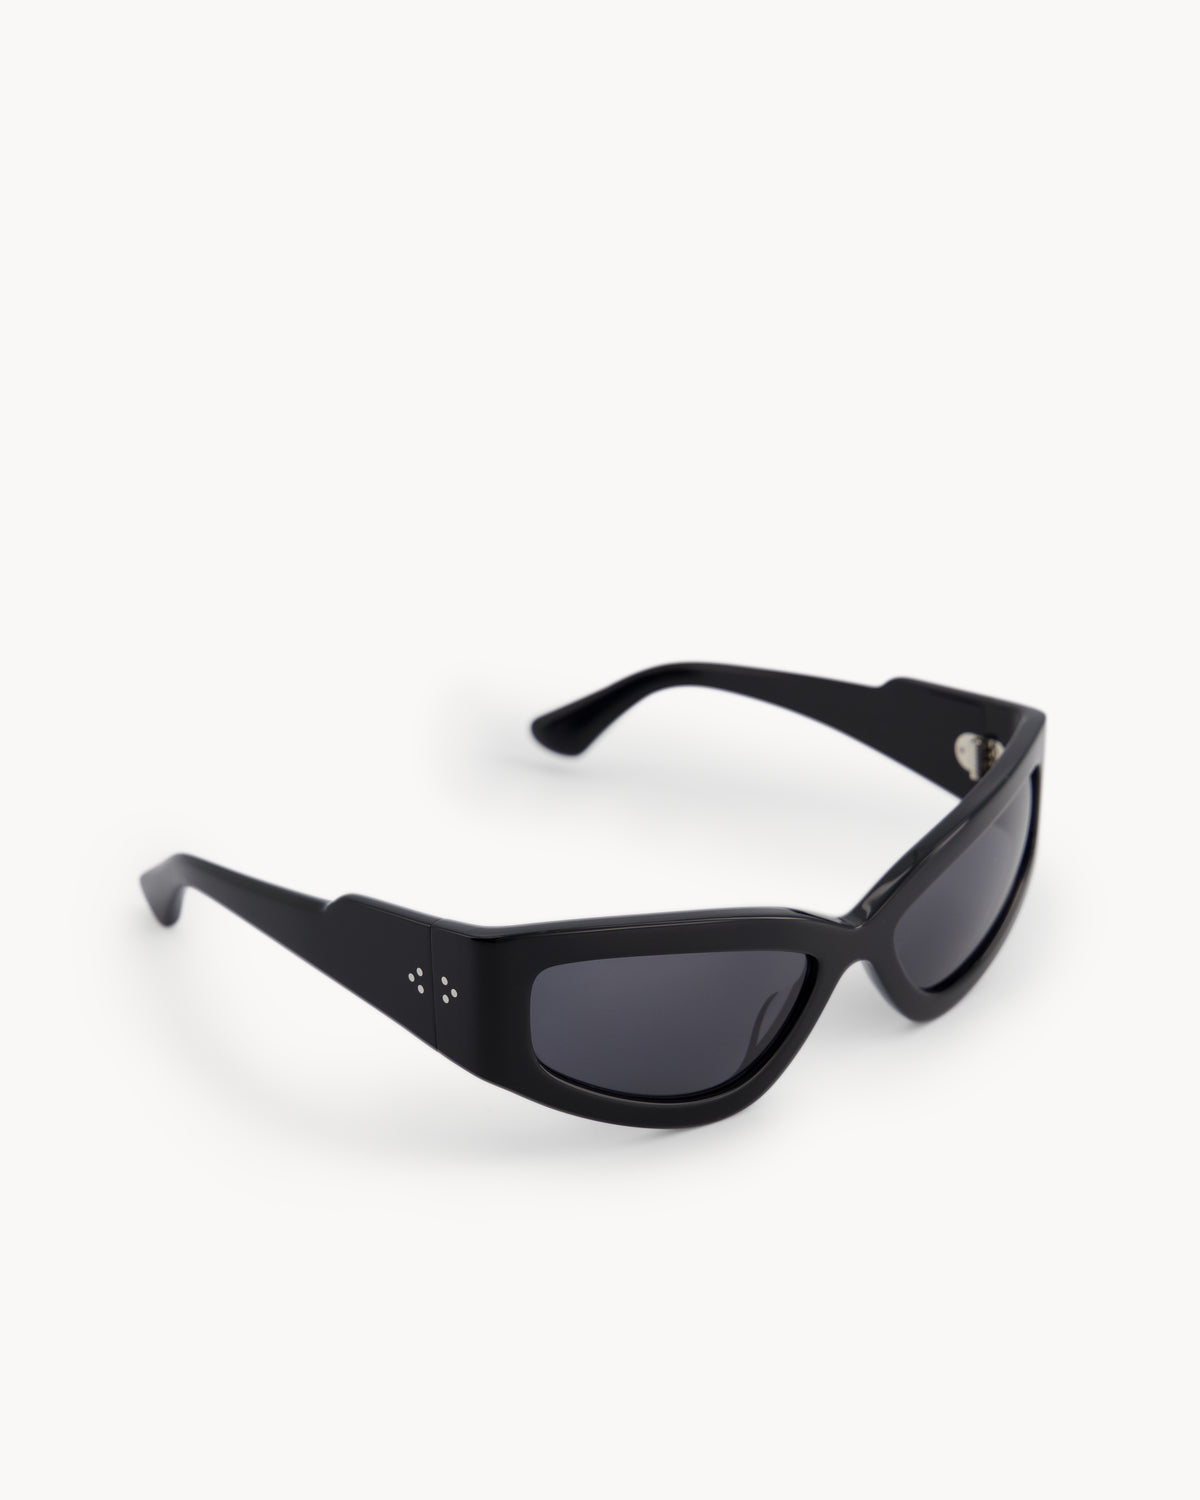 Port Tanger Shyan Sunglasses in Black Acetate and Black Lenses 2